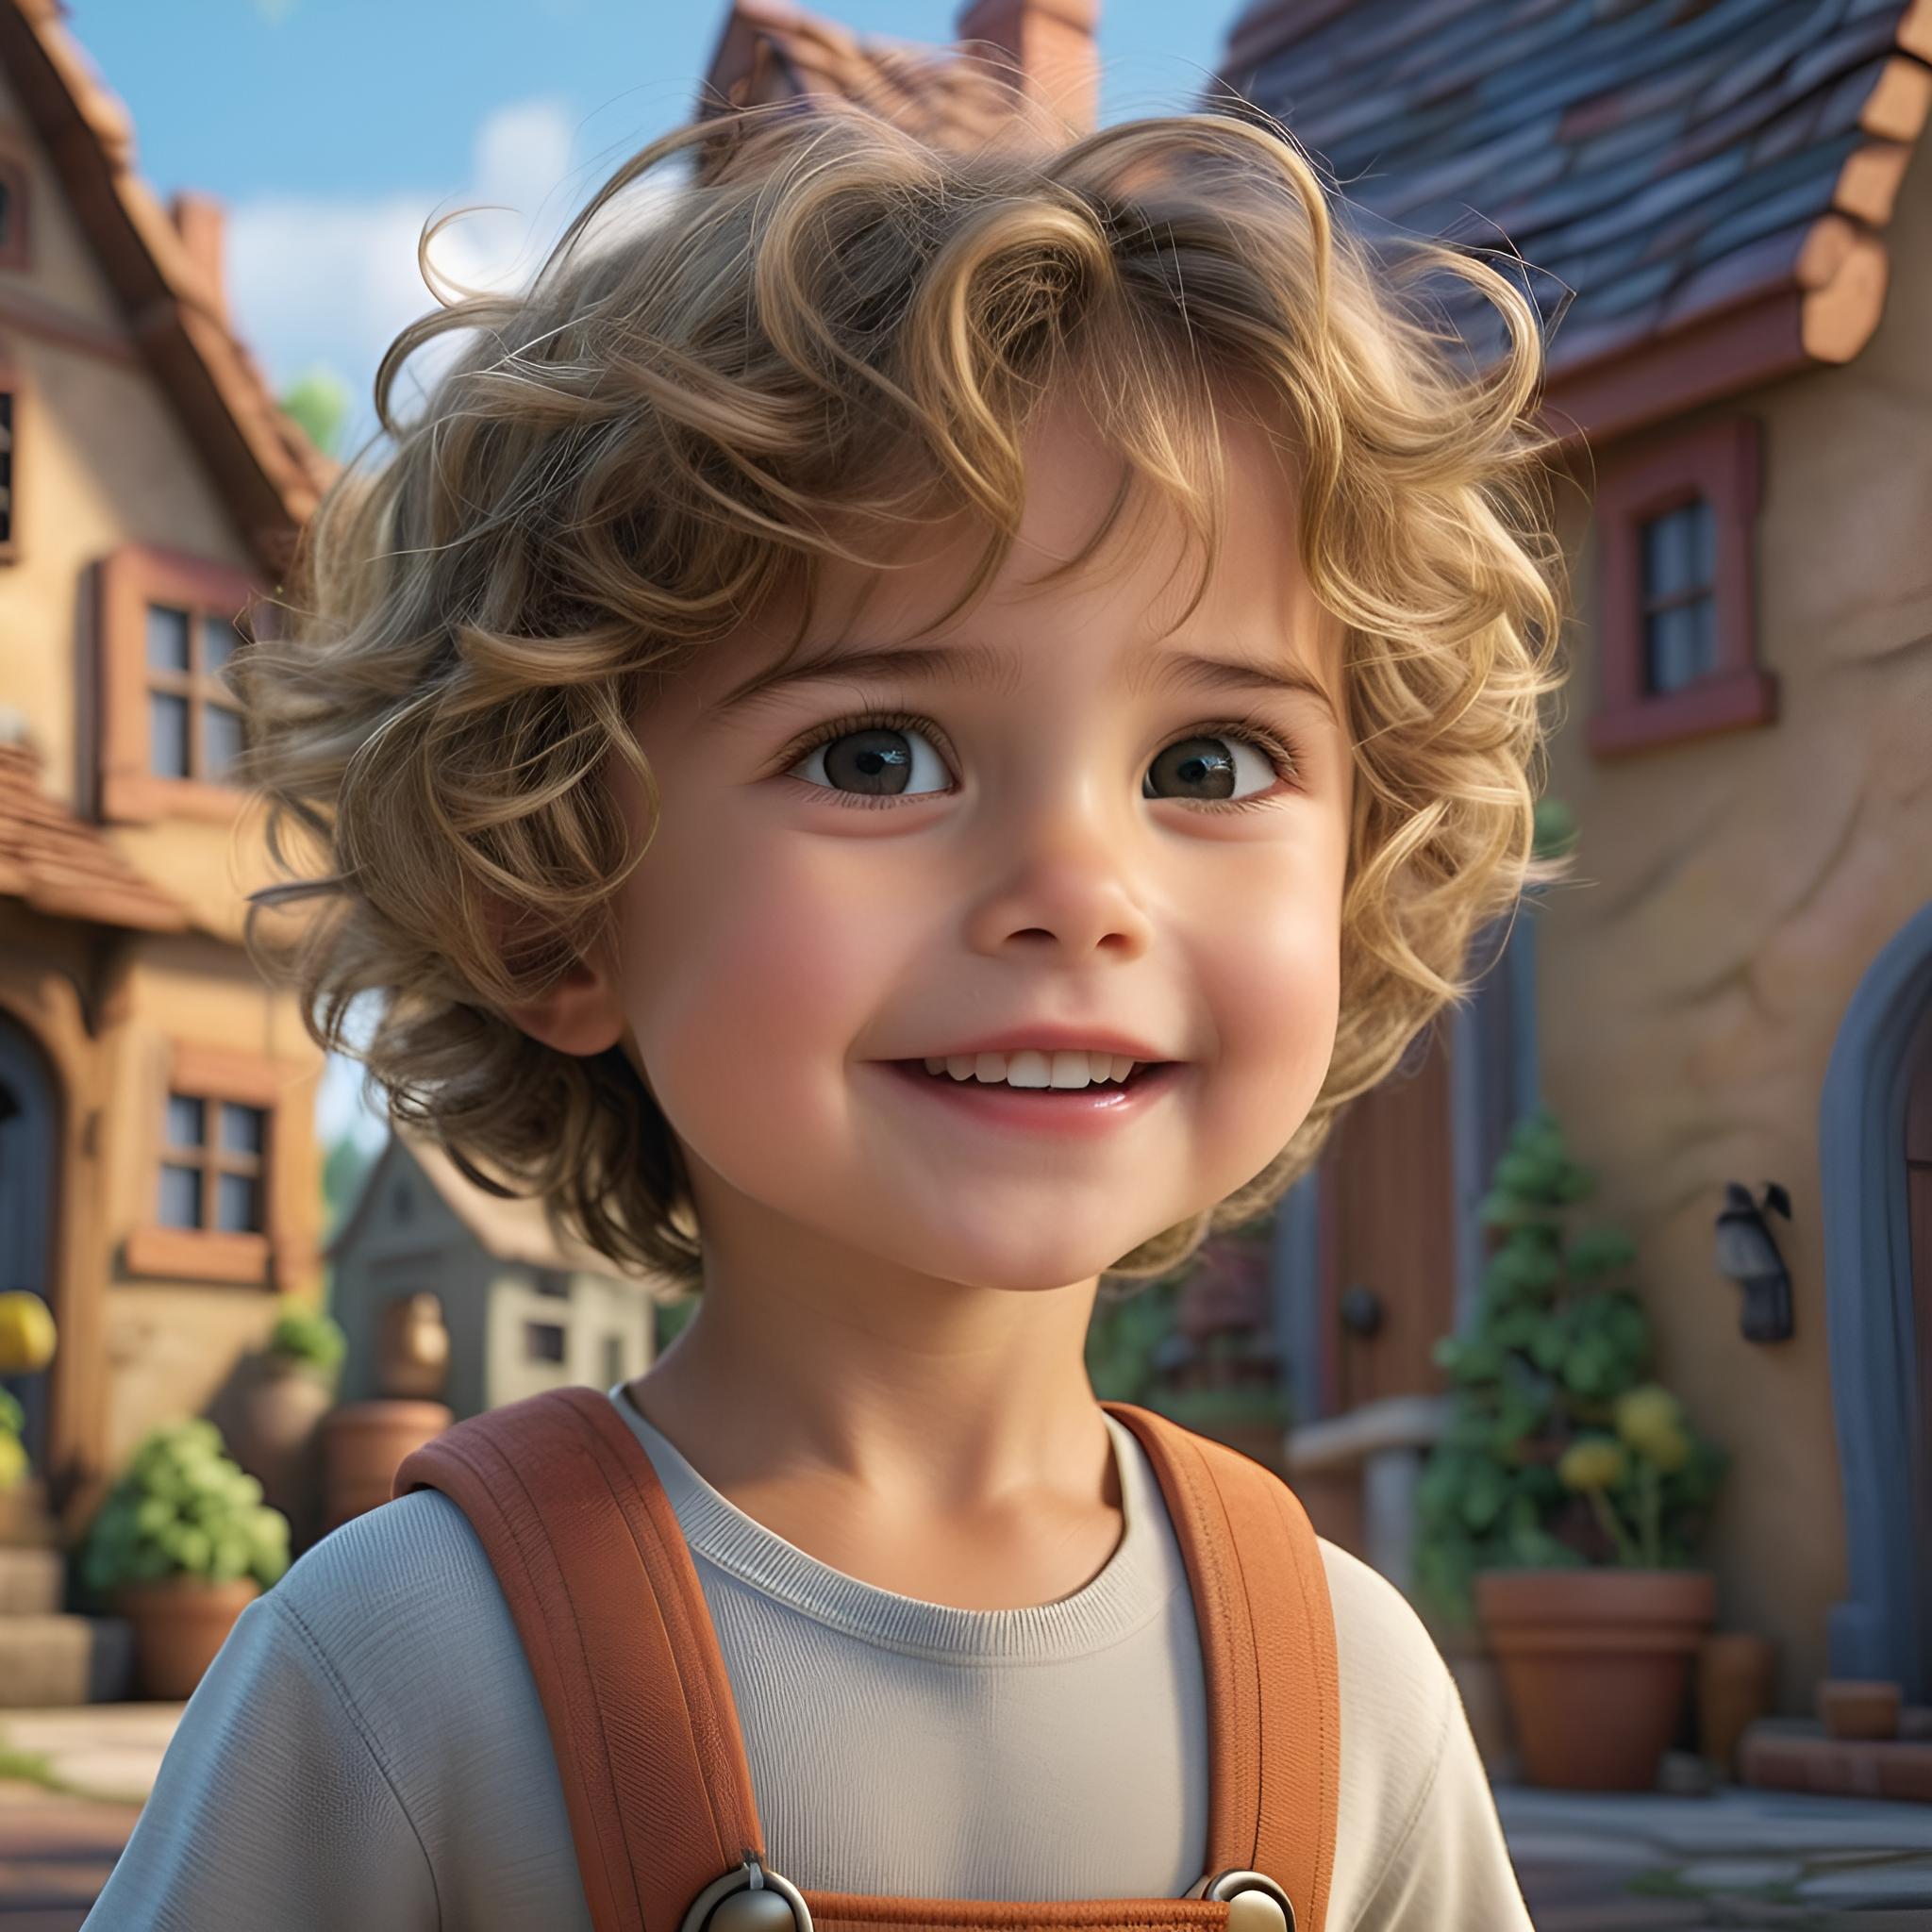 ai image of a boy as a pixar cartoon character